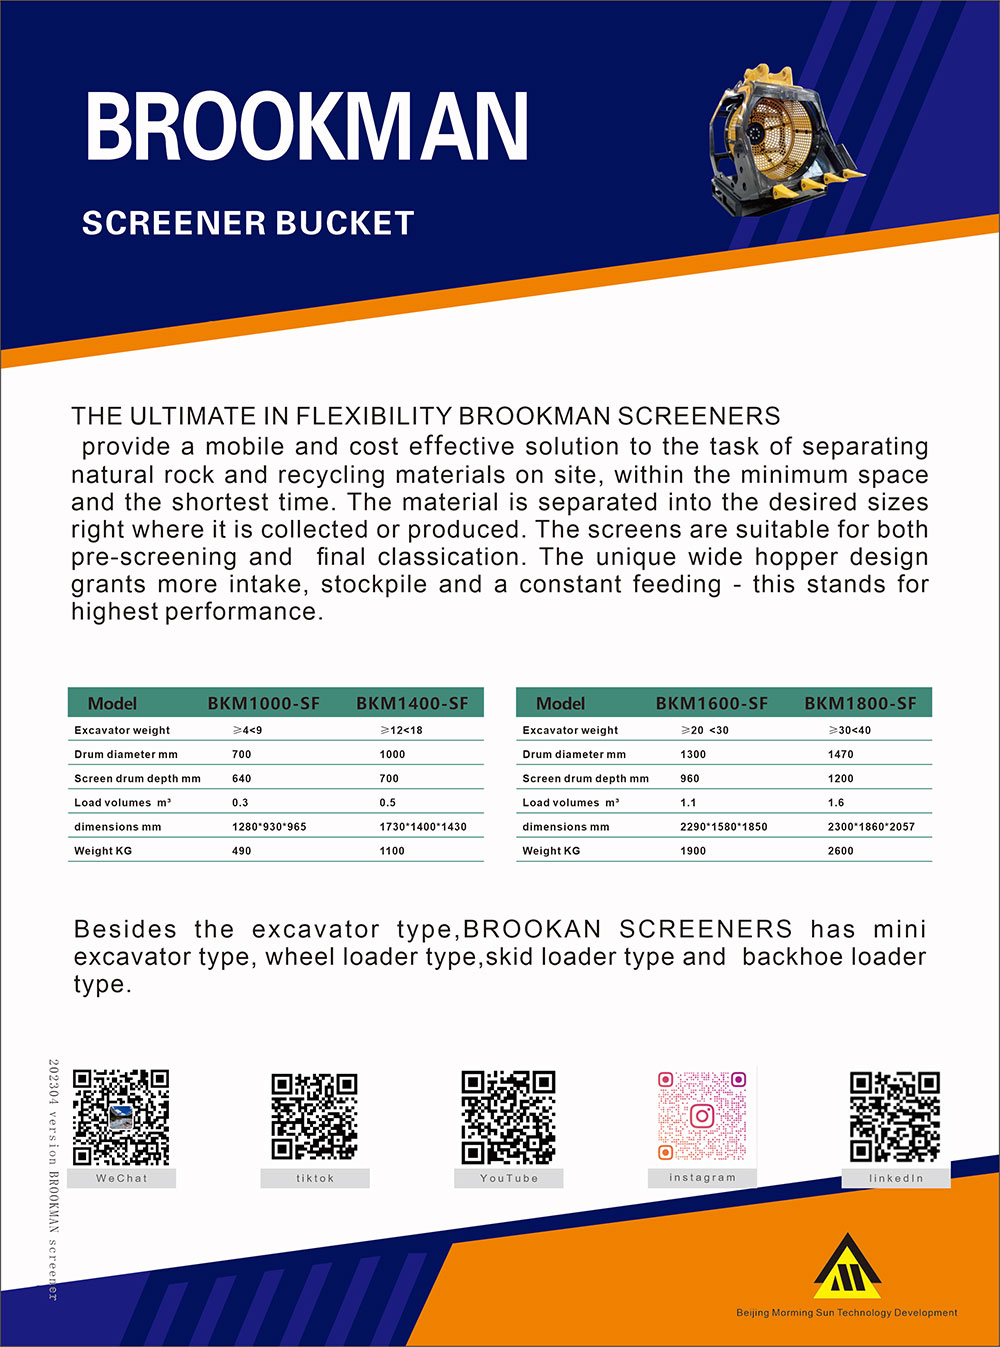 Brookman-screener-bucket-2.jpg